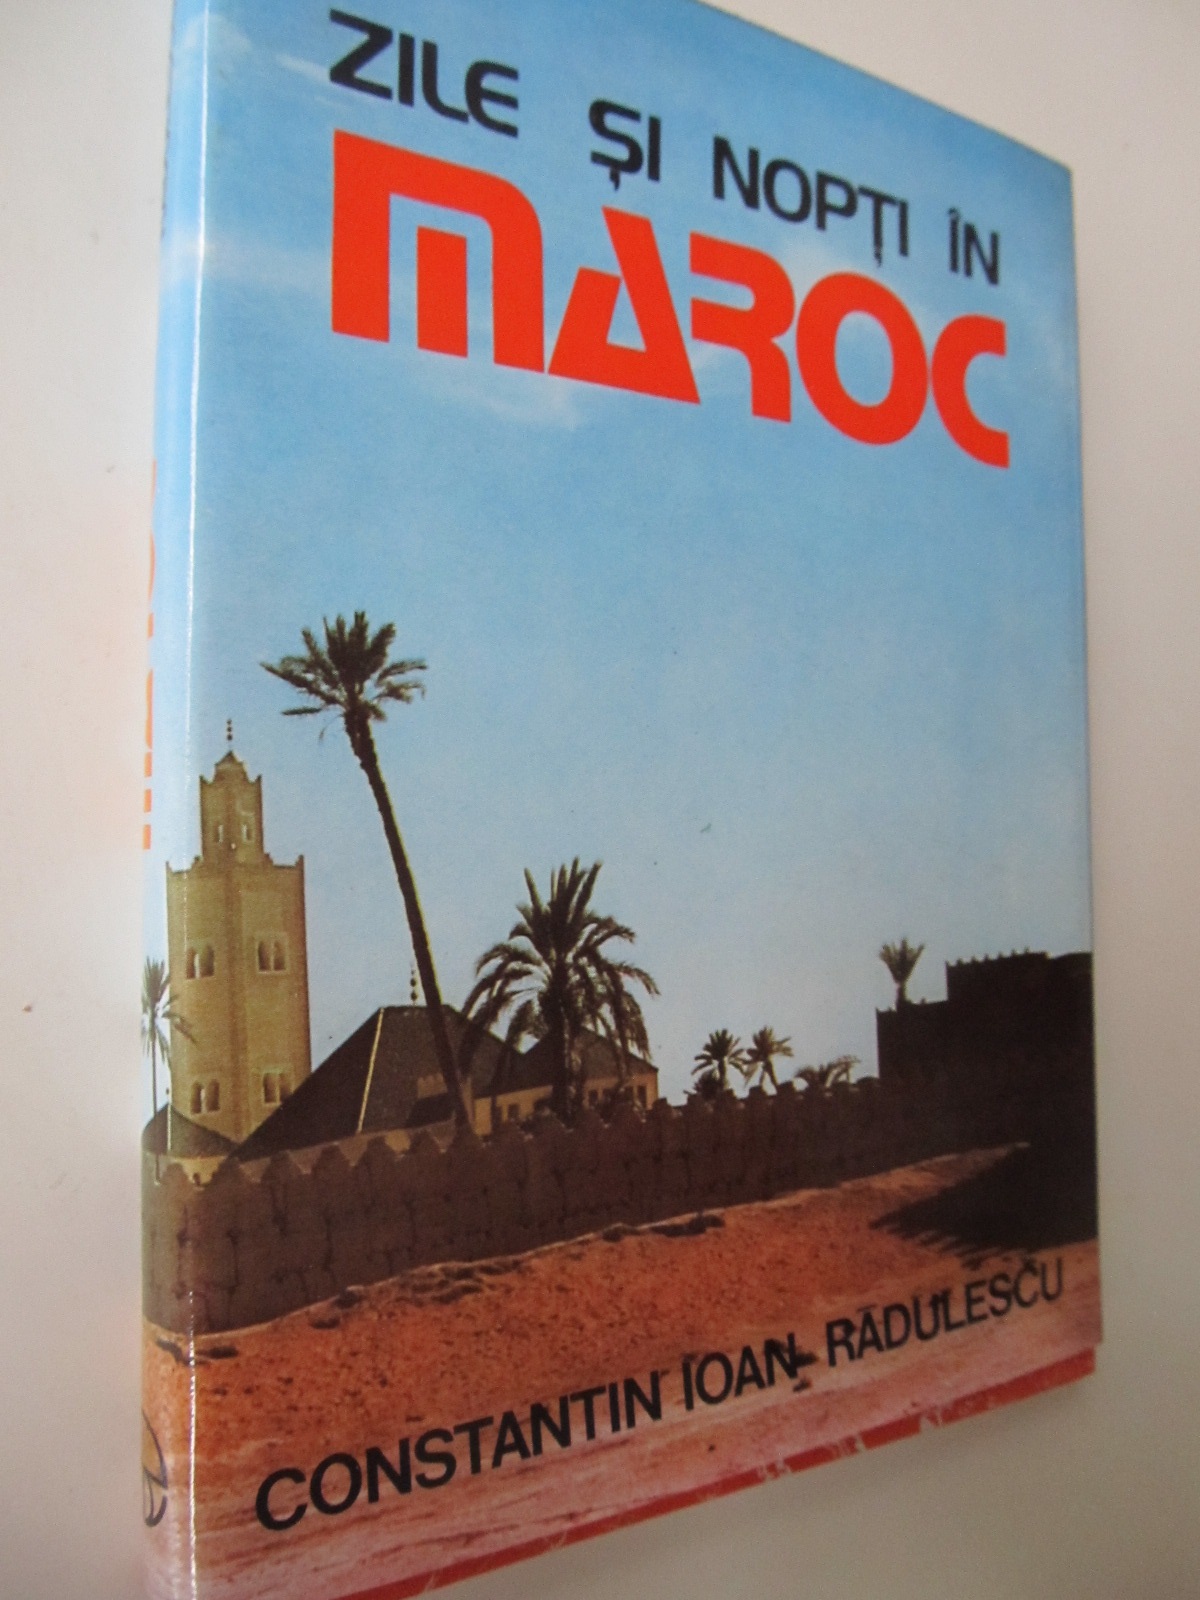 Zile si nopti in Maroc - Constantin Ioan Radulescu | Detalii carte